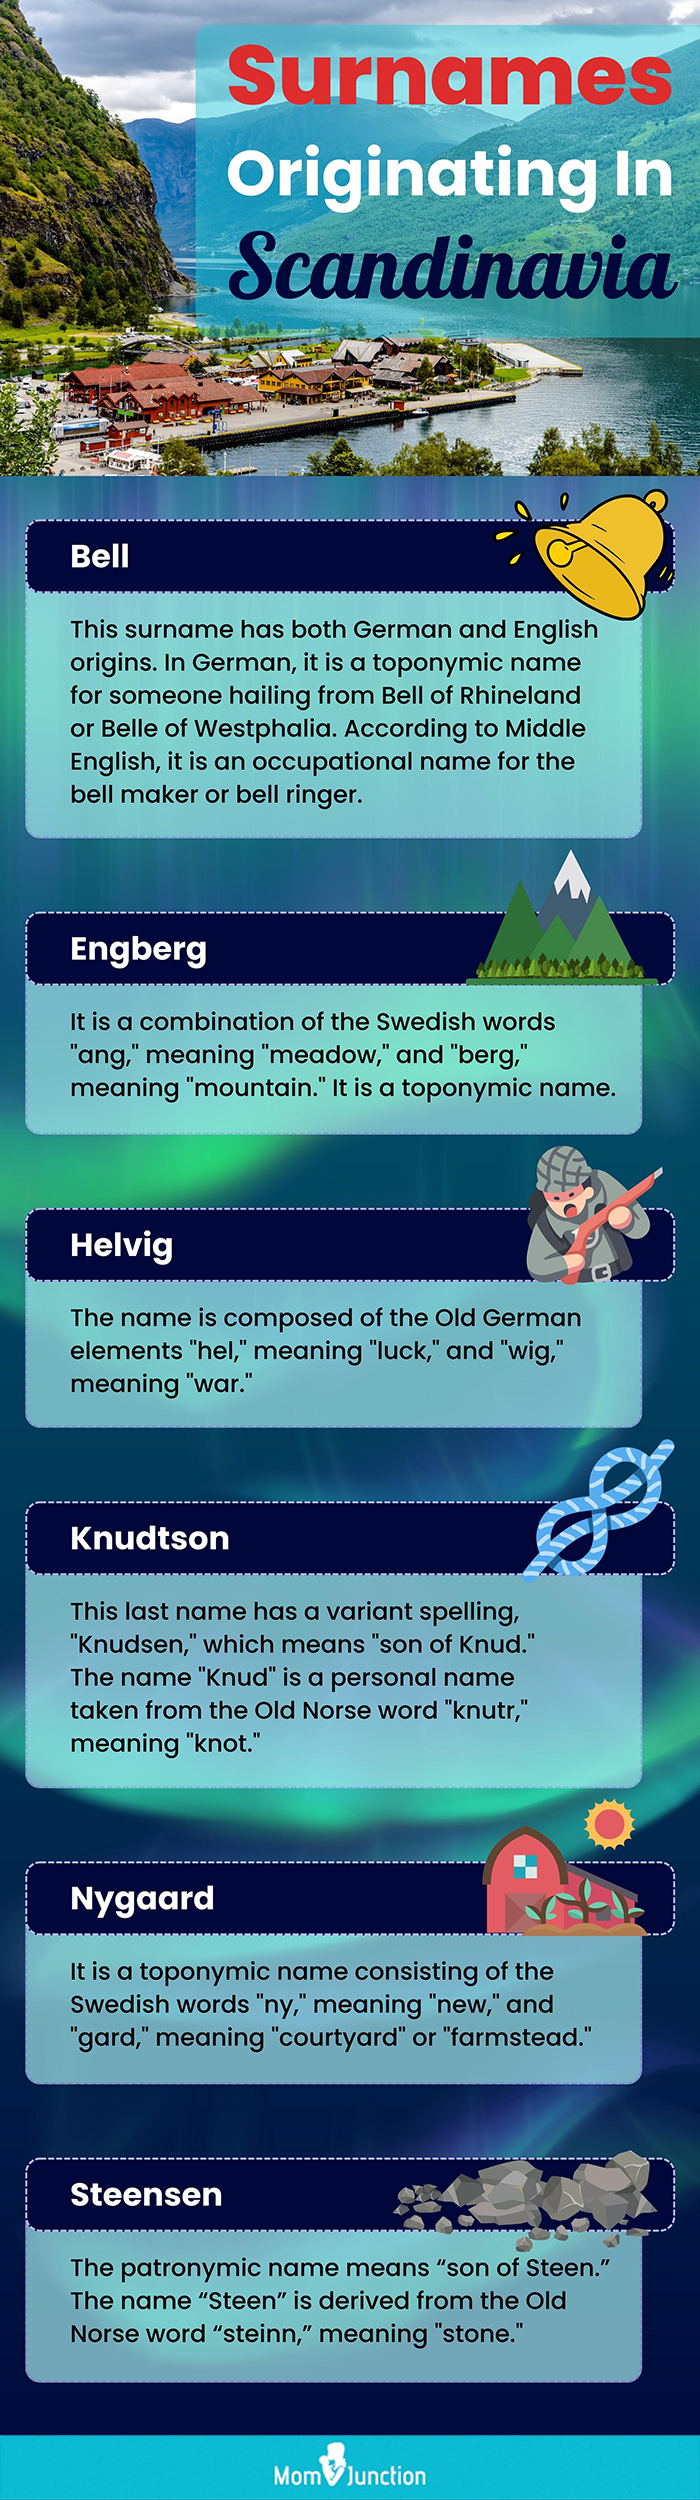 surnames originating in scandinavia (infographic)